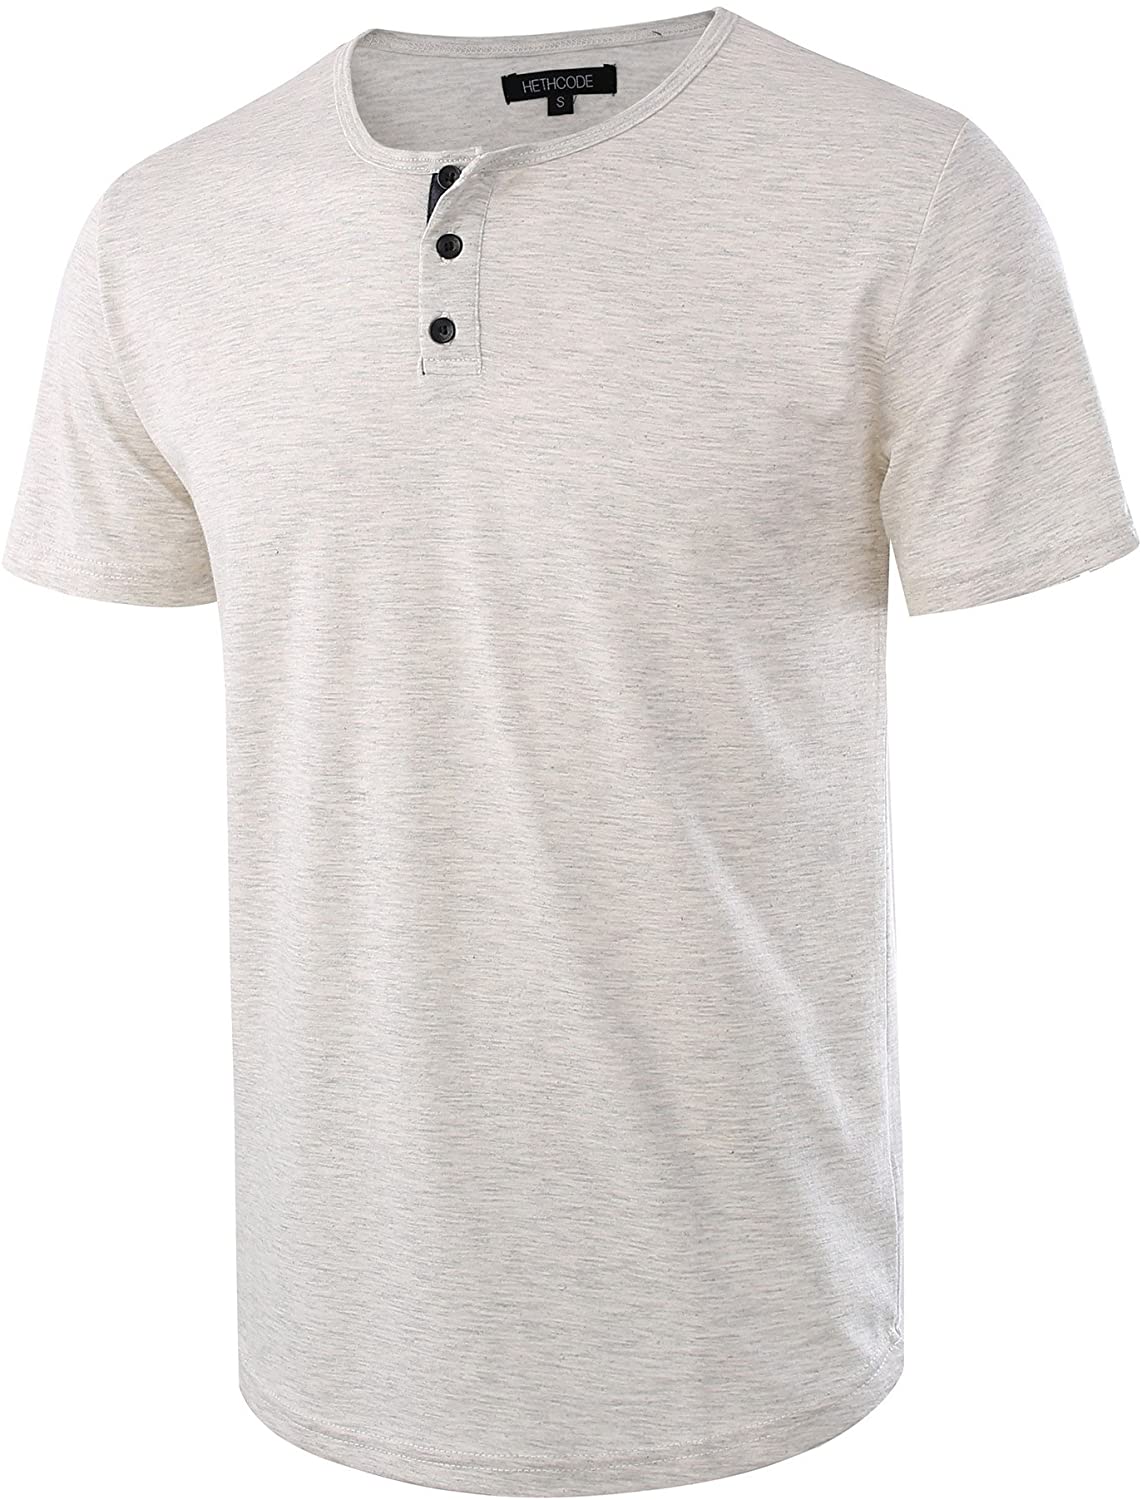 HETHCODE Mens Classic Comfort Soft Regular Fit Short Sleeve Henley T-Shirt Tee